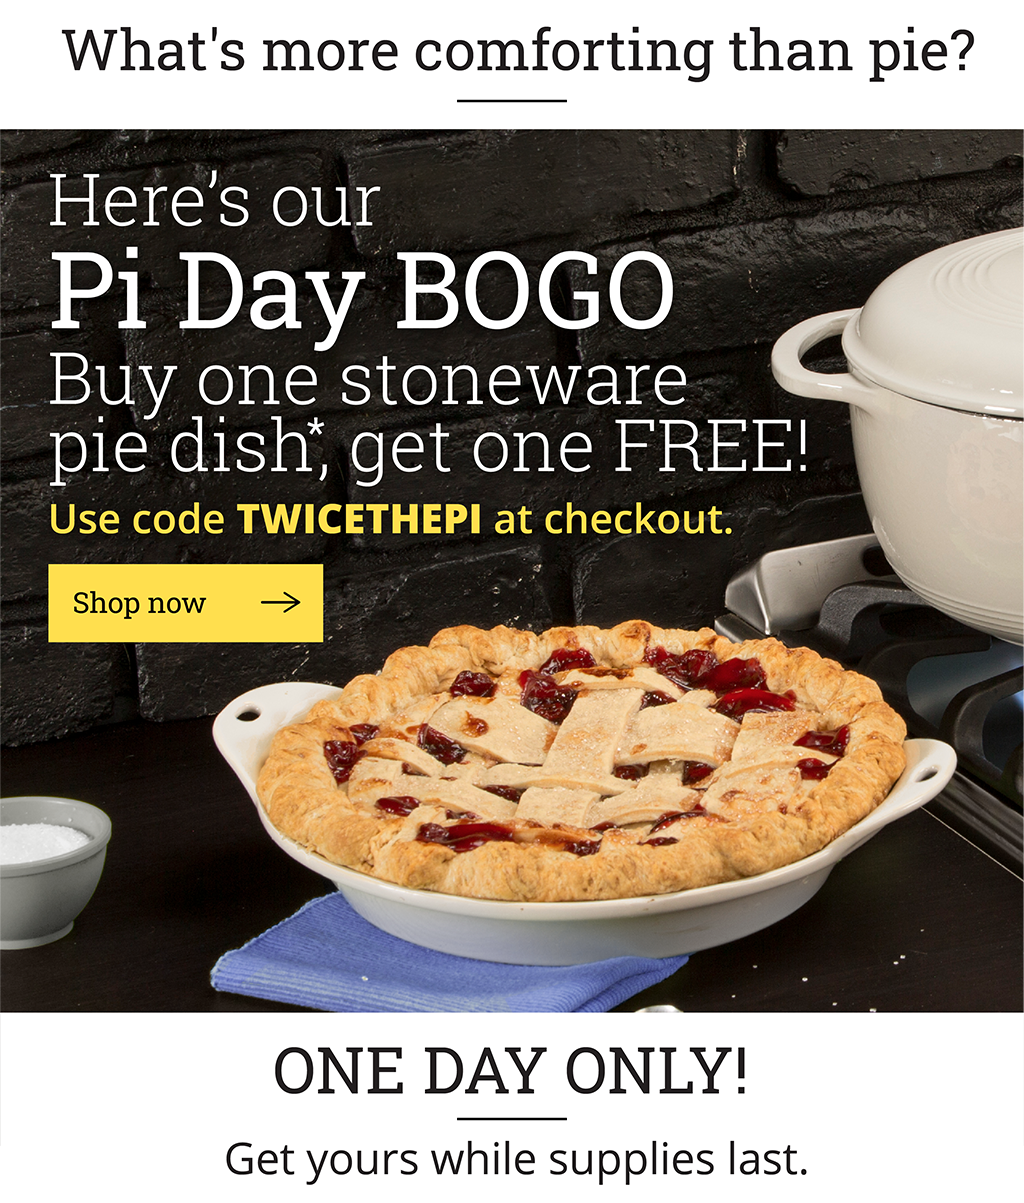 Pi Day BOGO Buy one stoneware pie dish*, get one FREE!Use code TWICETHEPI at checkout. [Shop now ?] One day only! Get yours while supplies last.